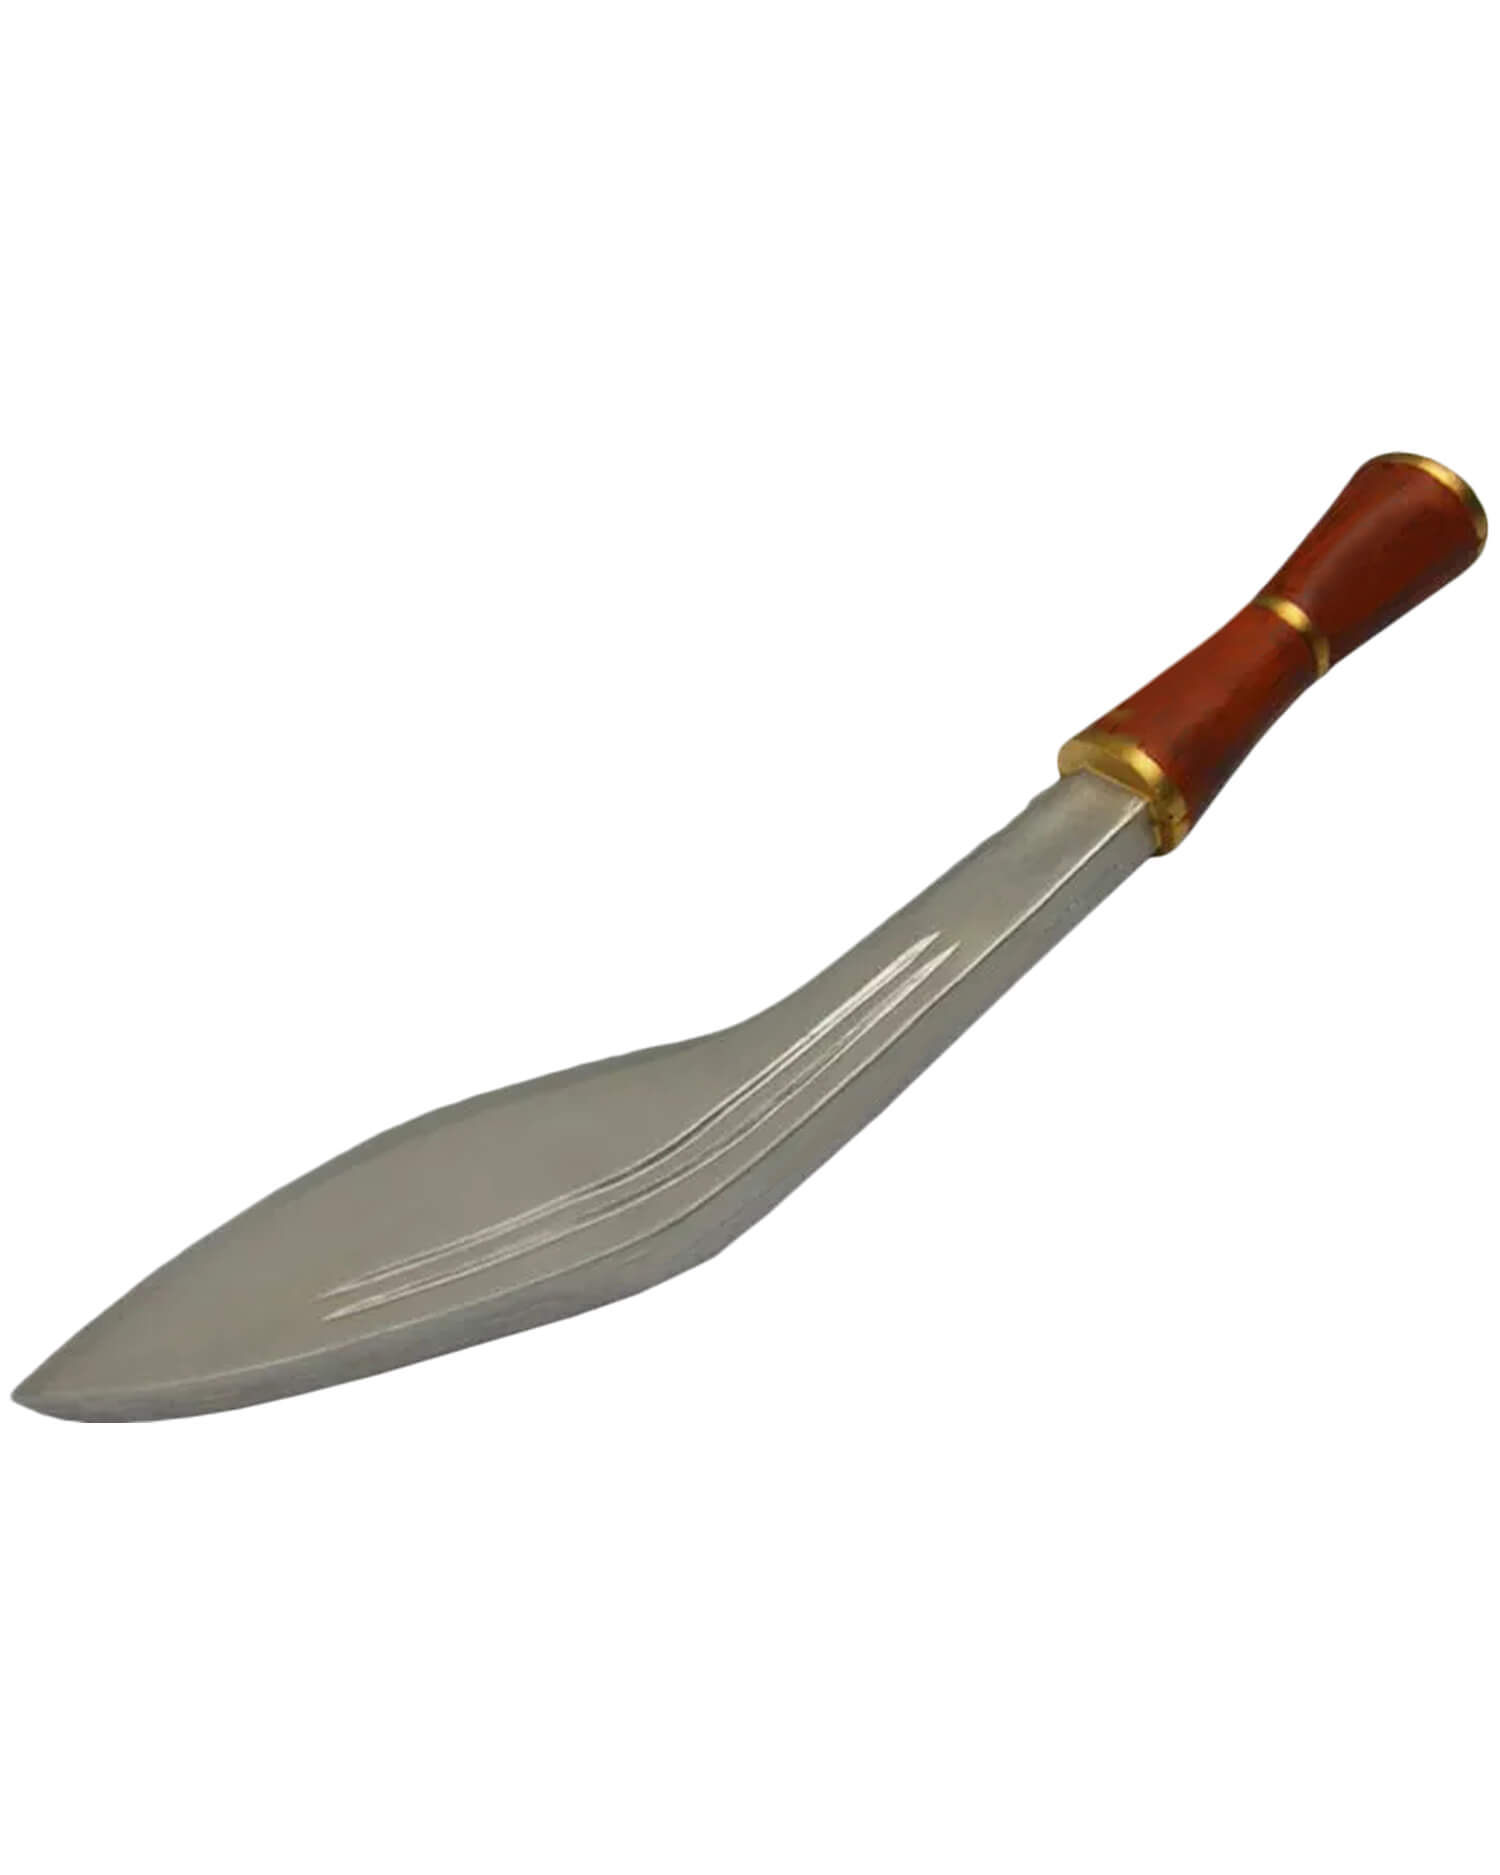 Khukuri knife